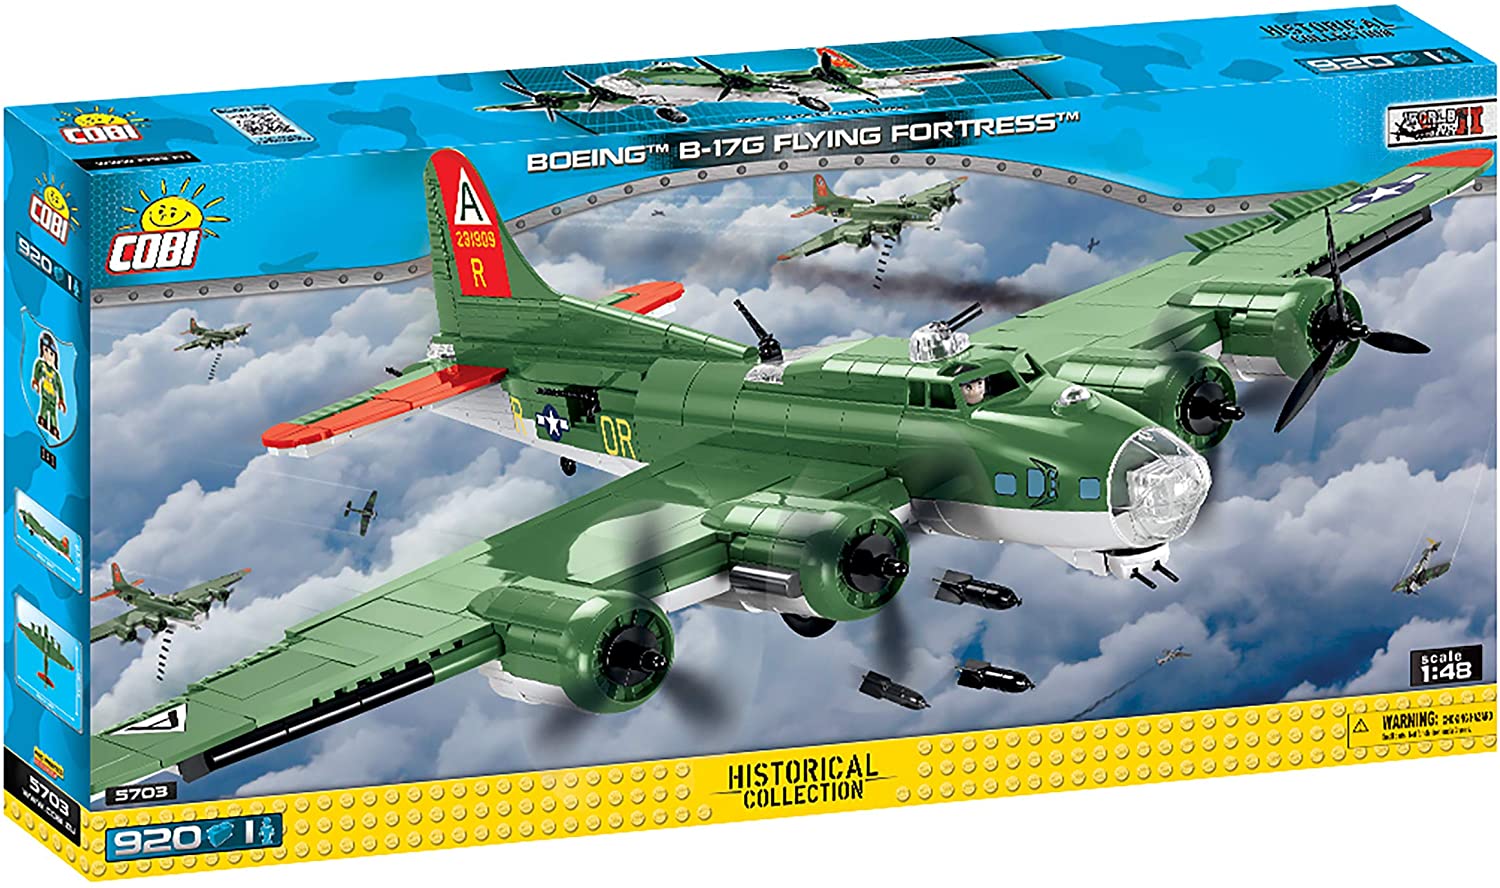 Cobi Bomber B-17 Flying Fortress Construction Kit No. 5703